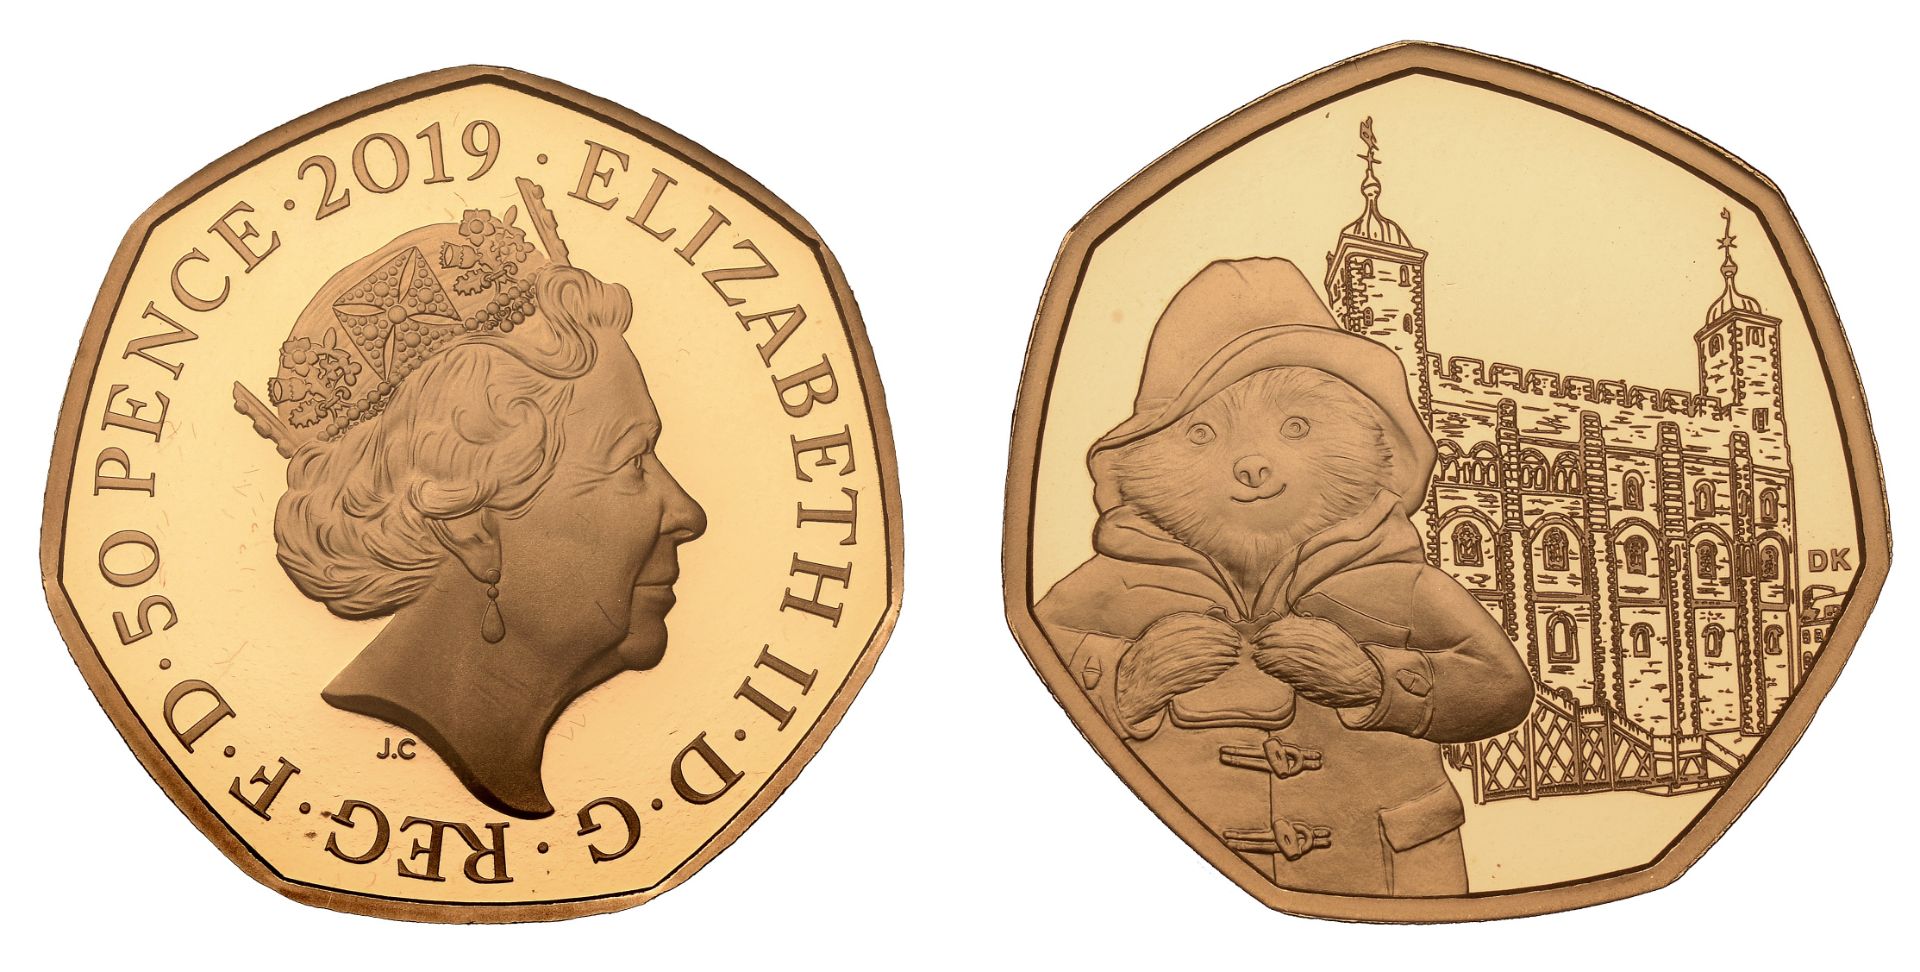 Elizabeth II (1952-2022), Decimal issues, Proof Fifty Pence, 2019, in gold, Paddington Bear...